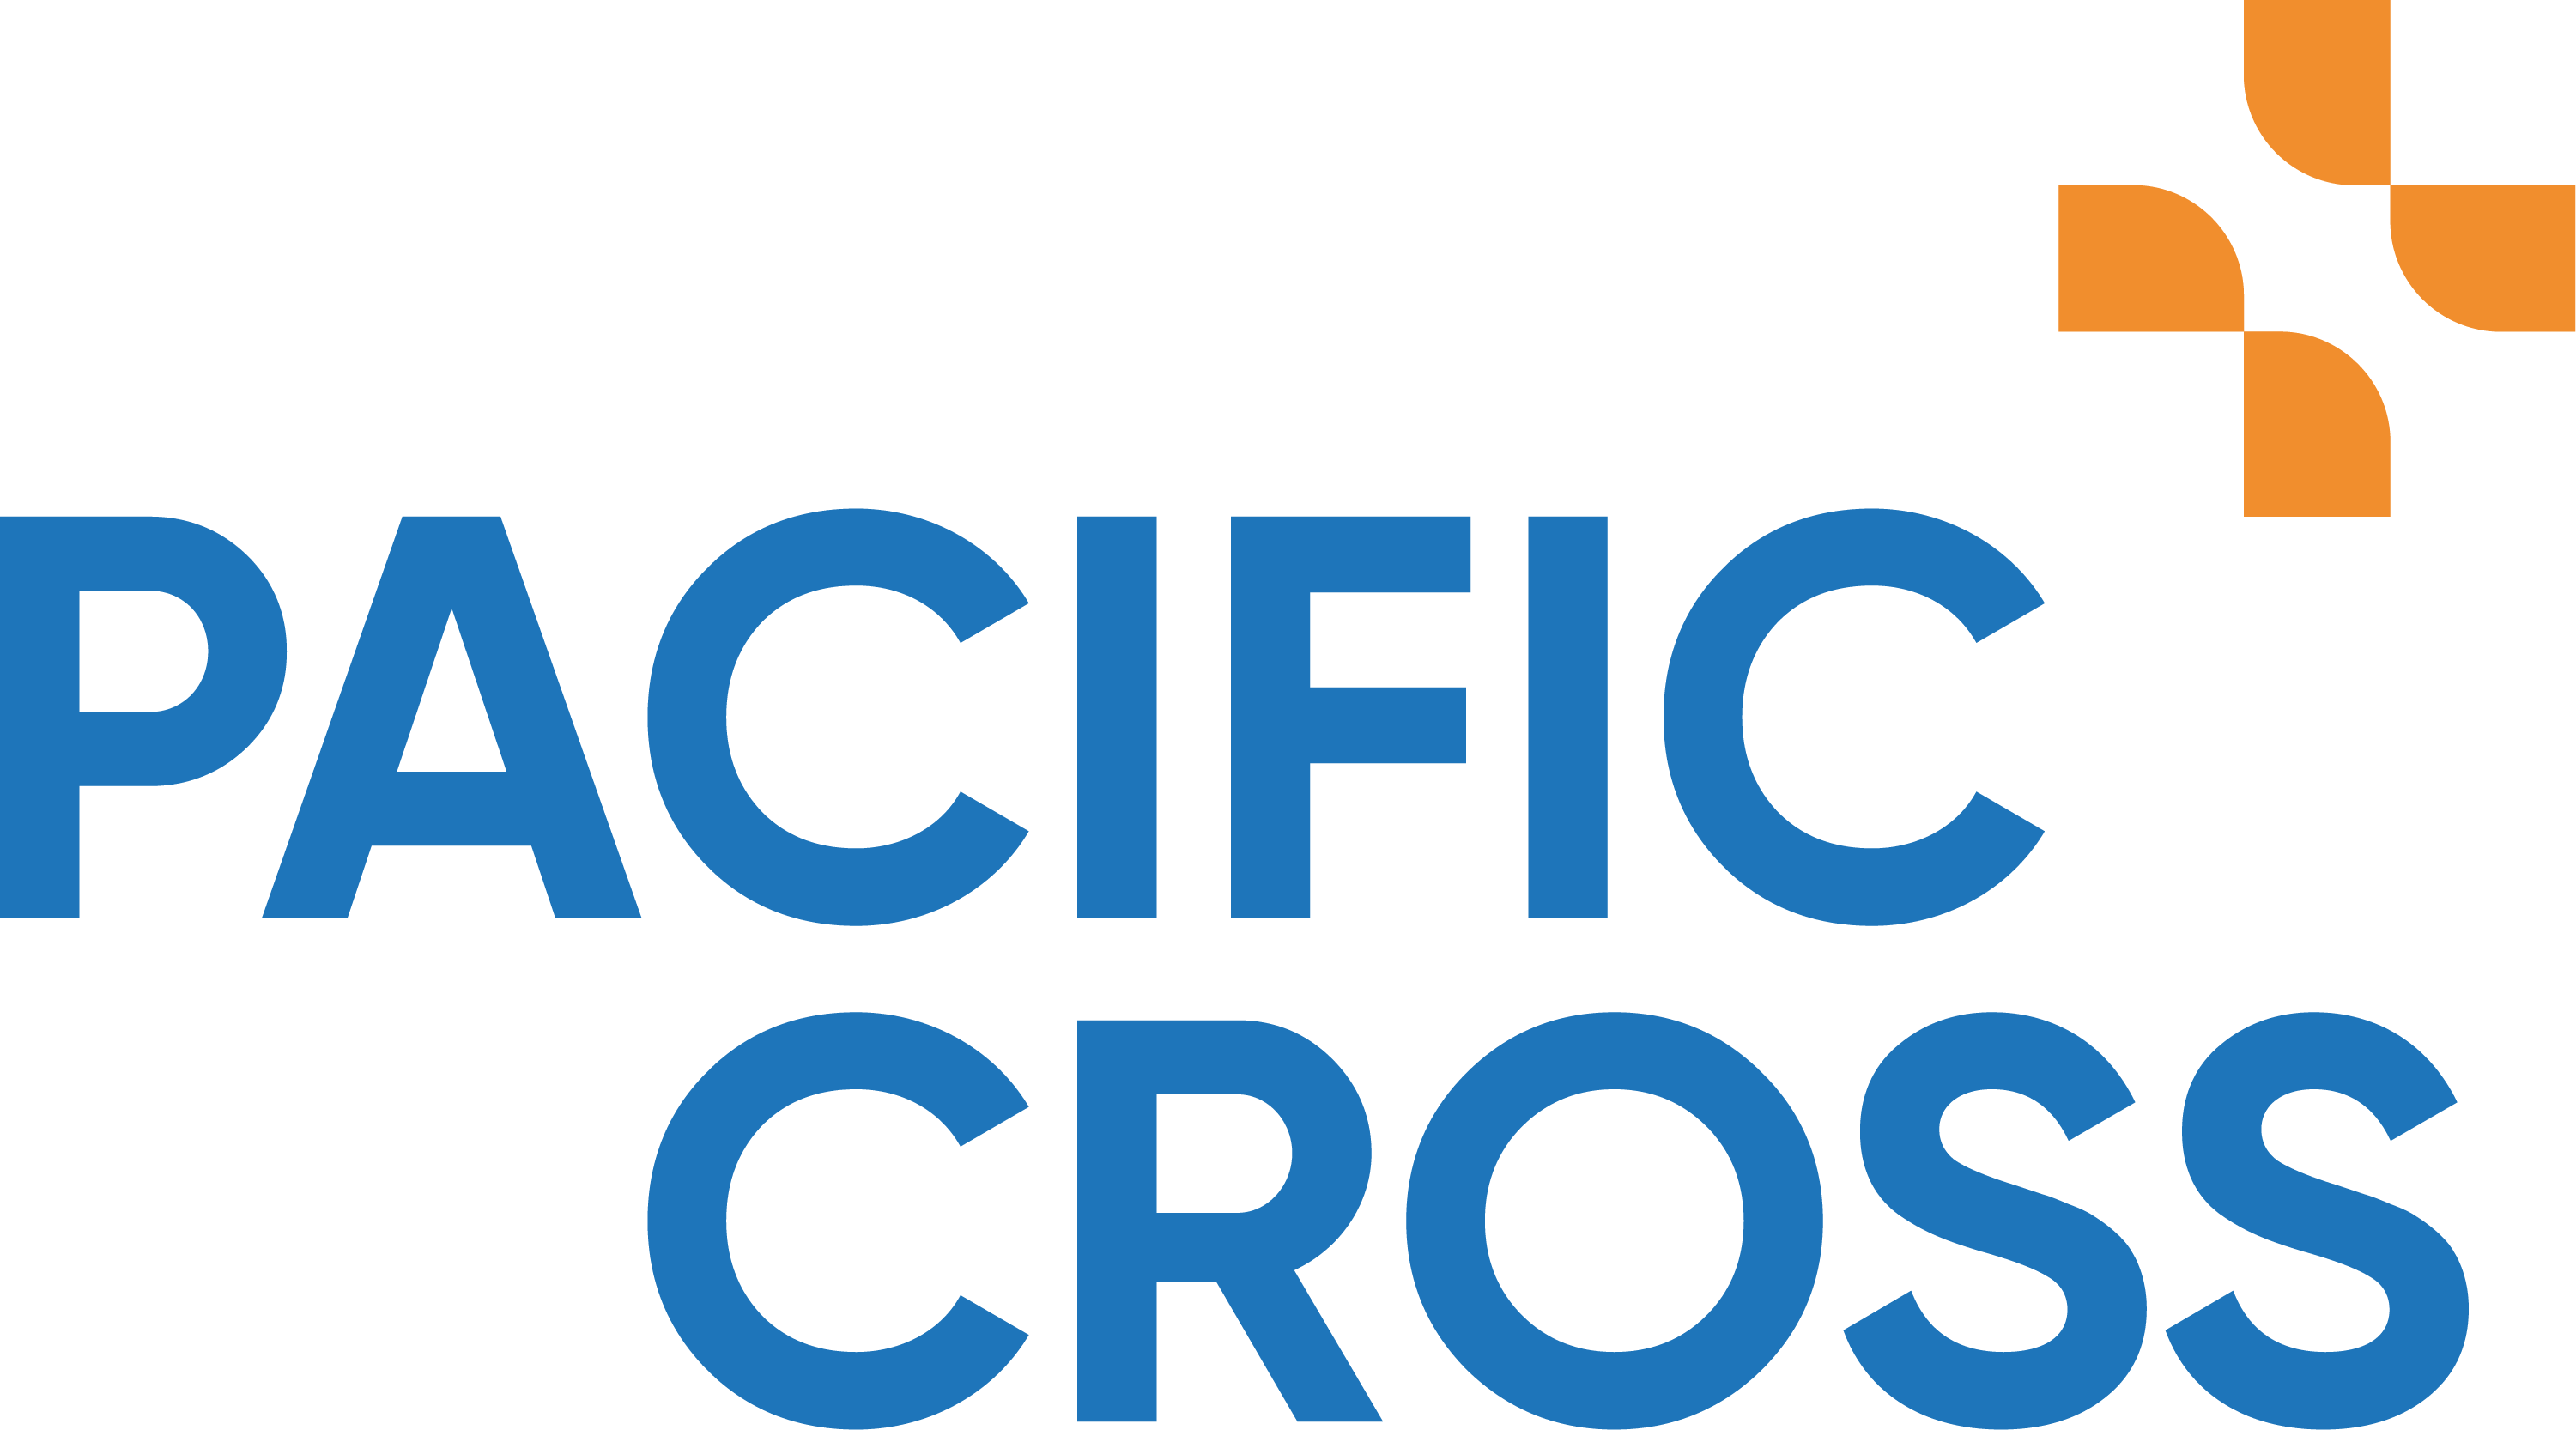 Pacific Cross Brand Logo